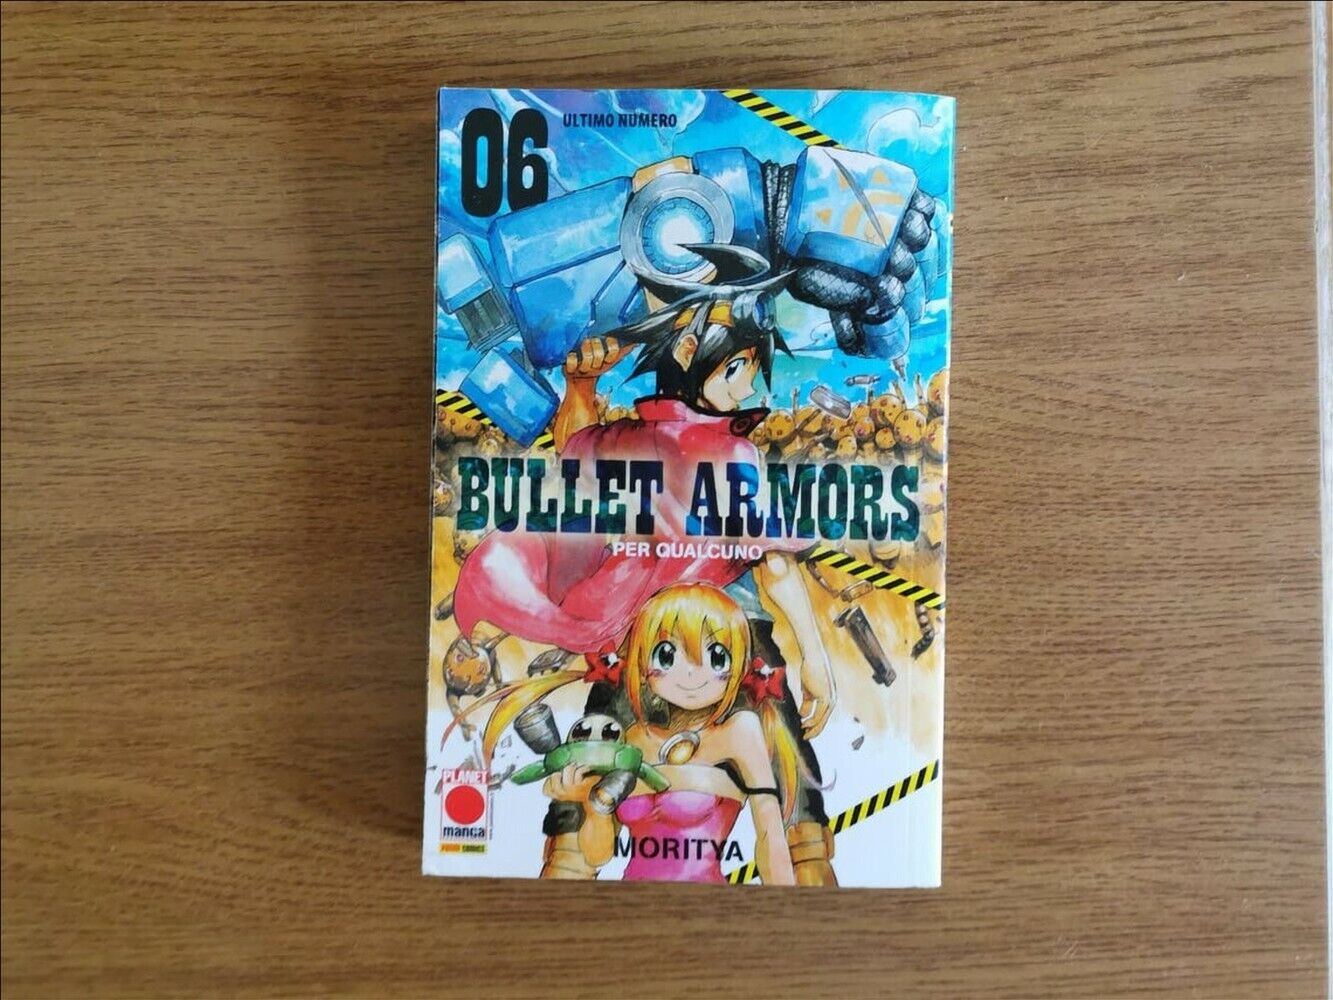 Bullet armons - Moritya - Planet manga - 2008 - AR